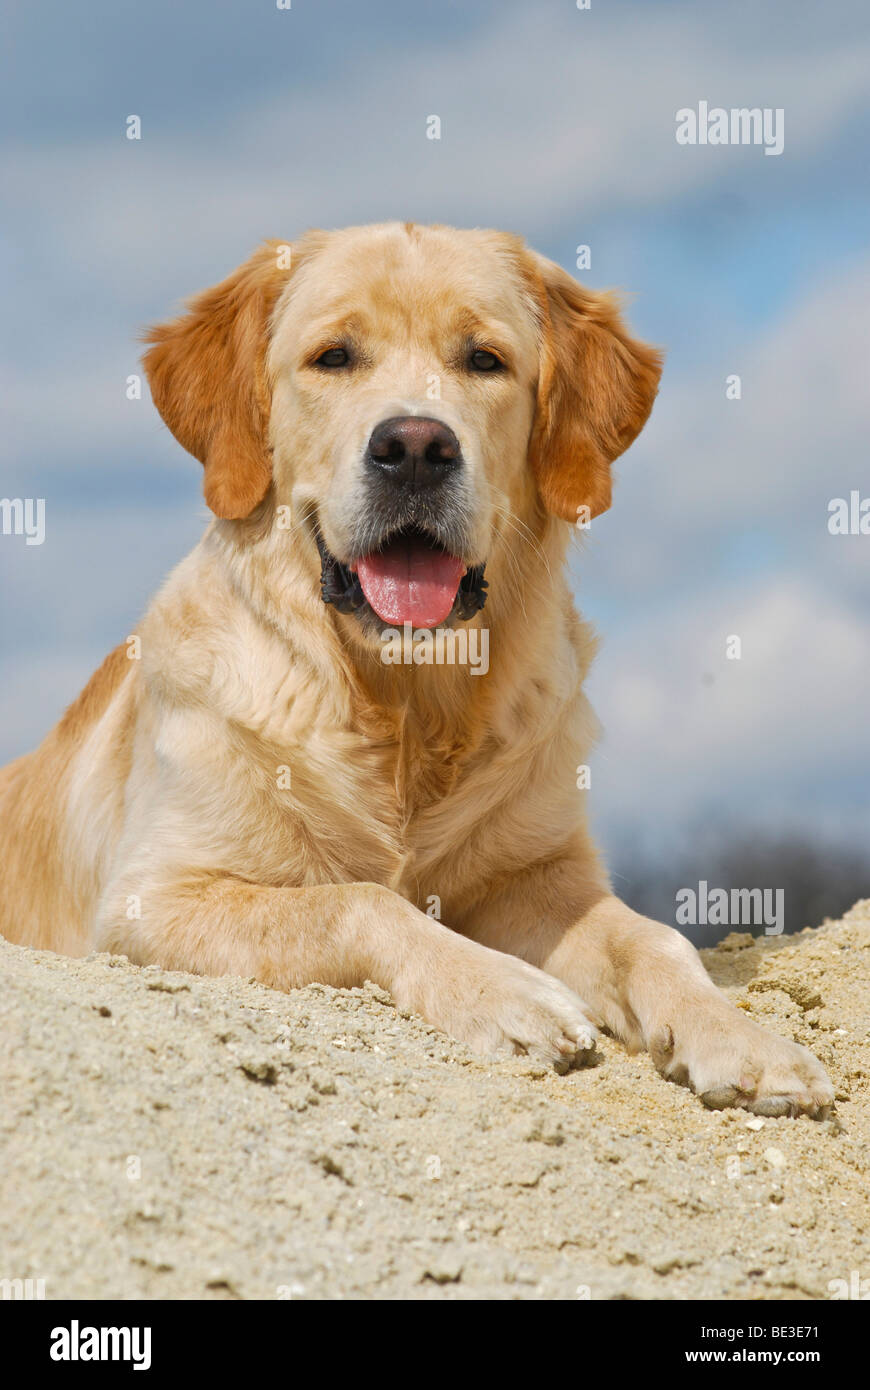 Golden Retriever lying on a sand hill Stock Photo